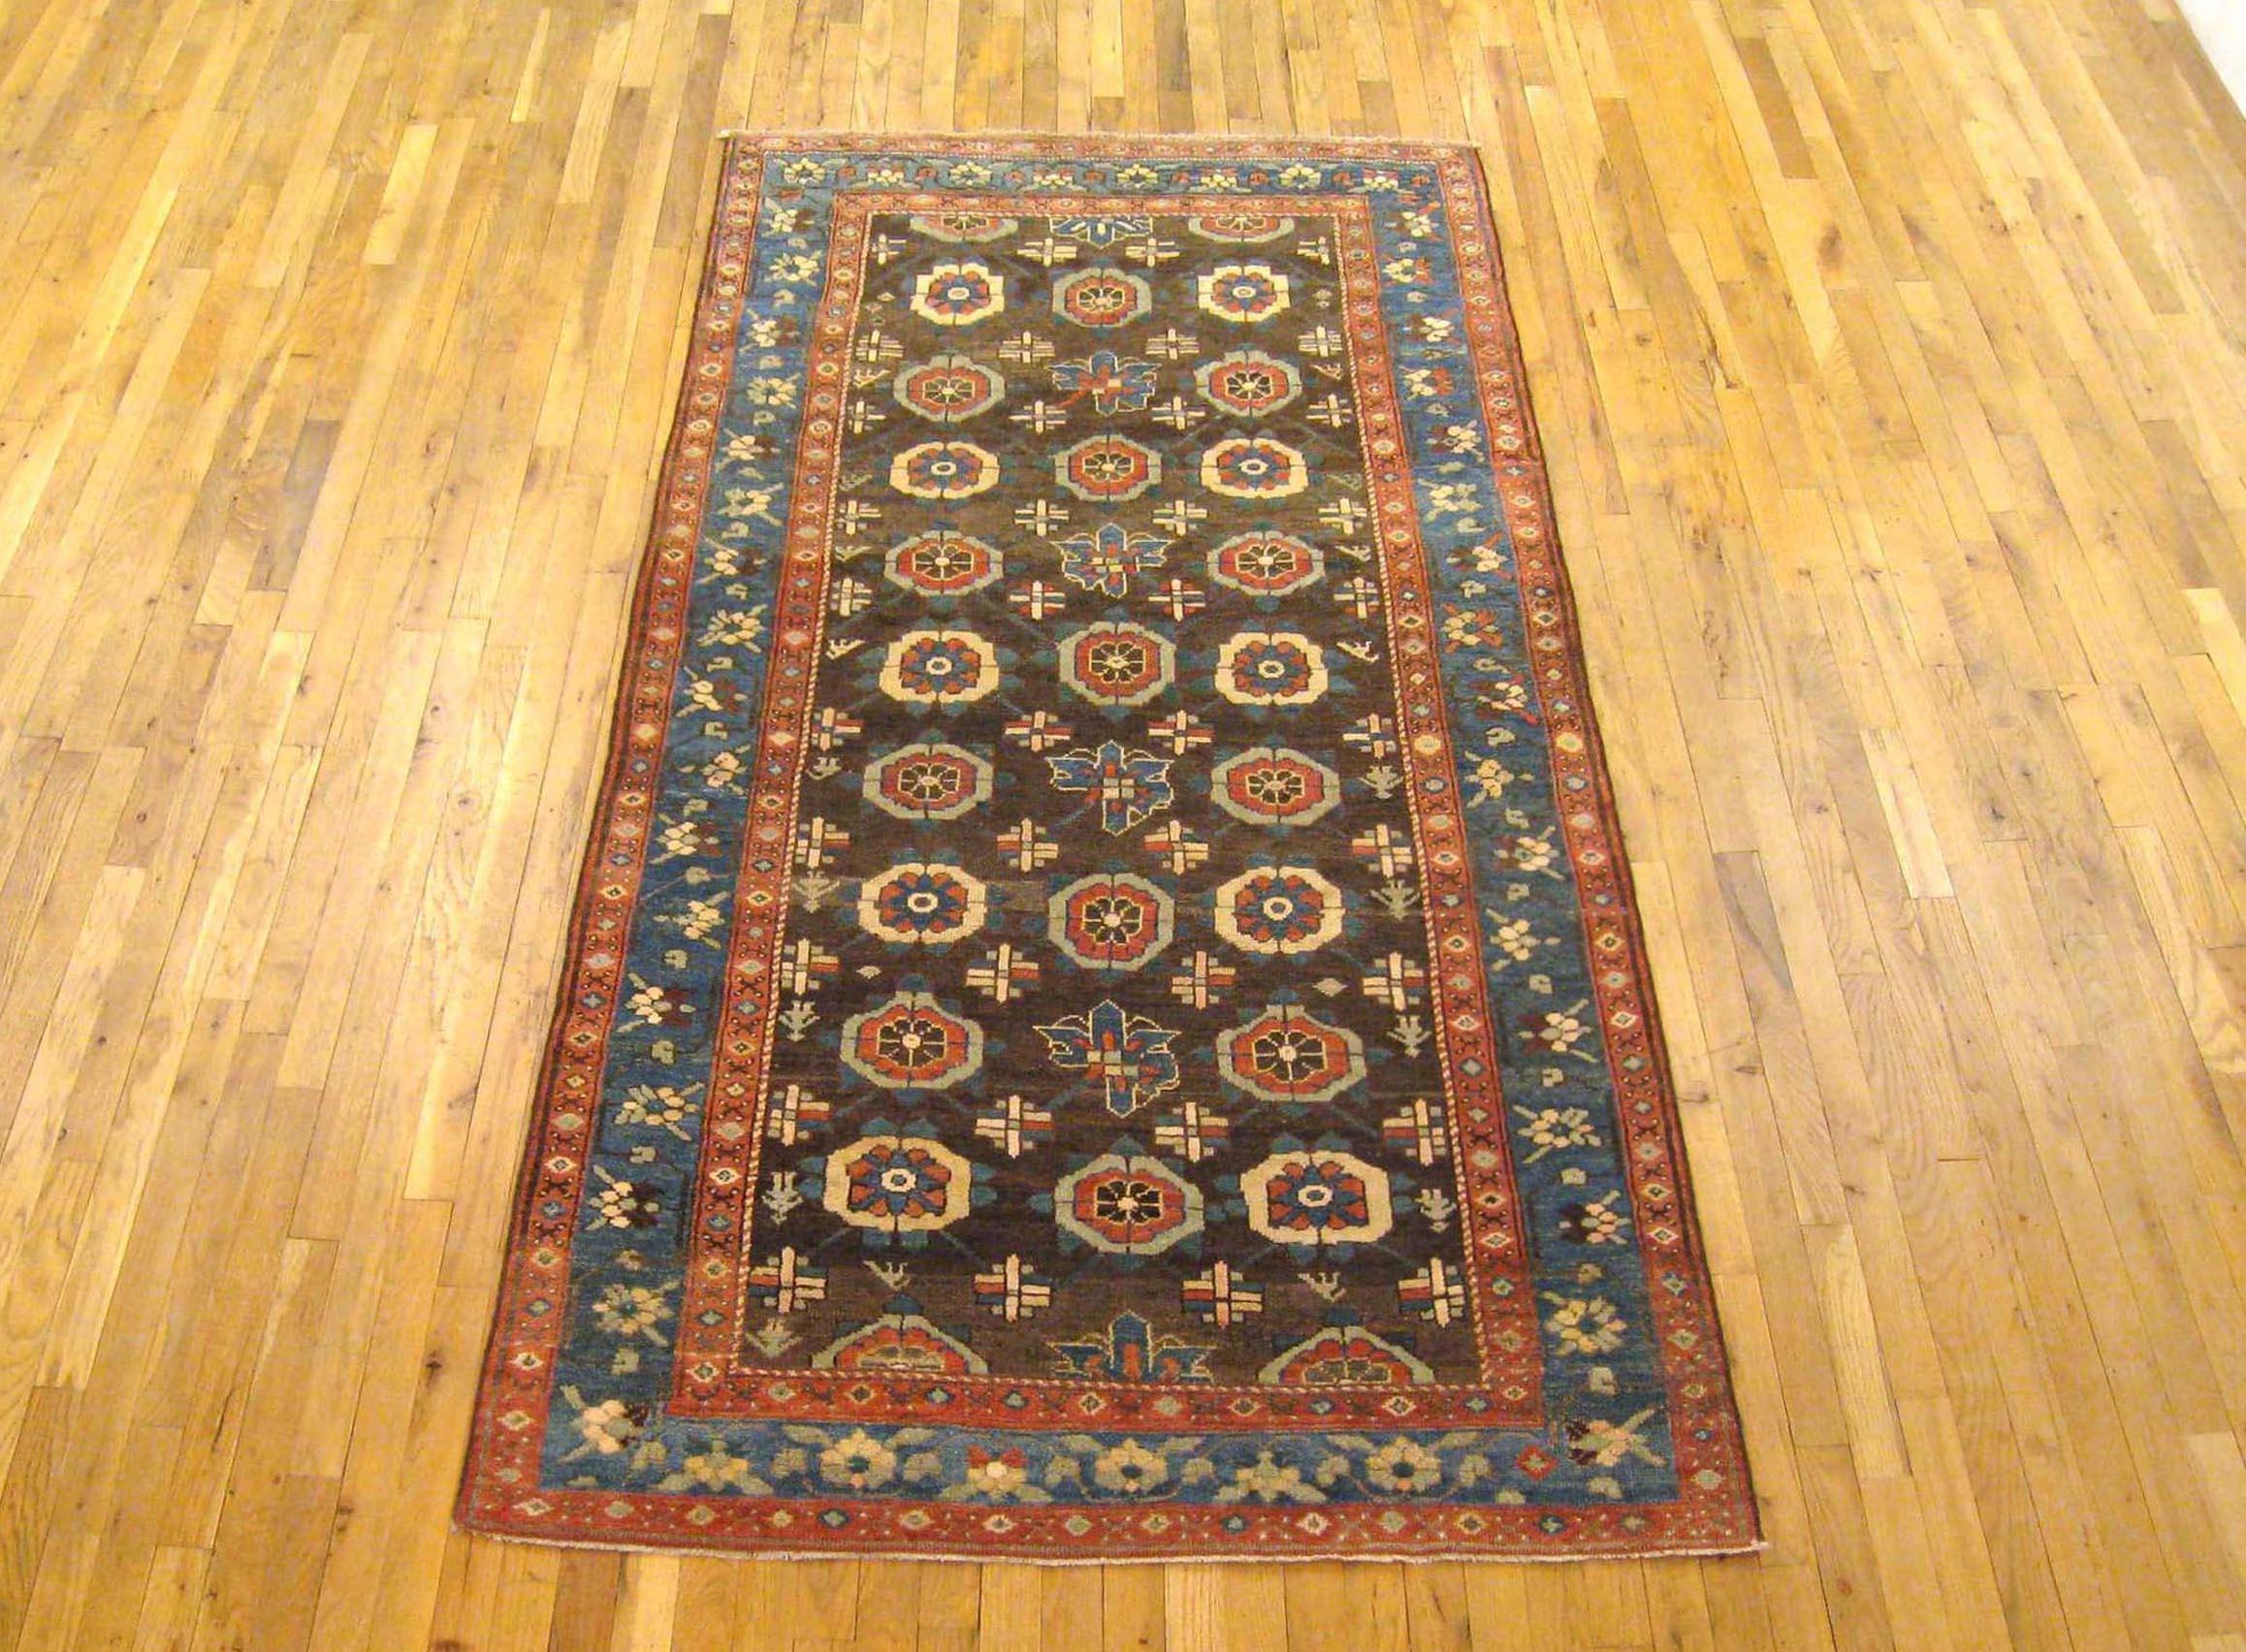 Antique Northwest Persian carpet, Gallery size, size 8'5